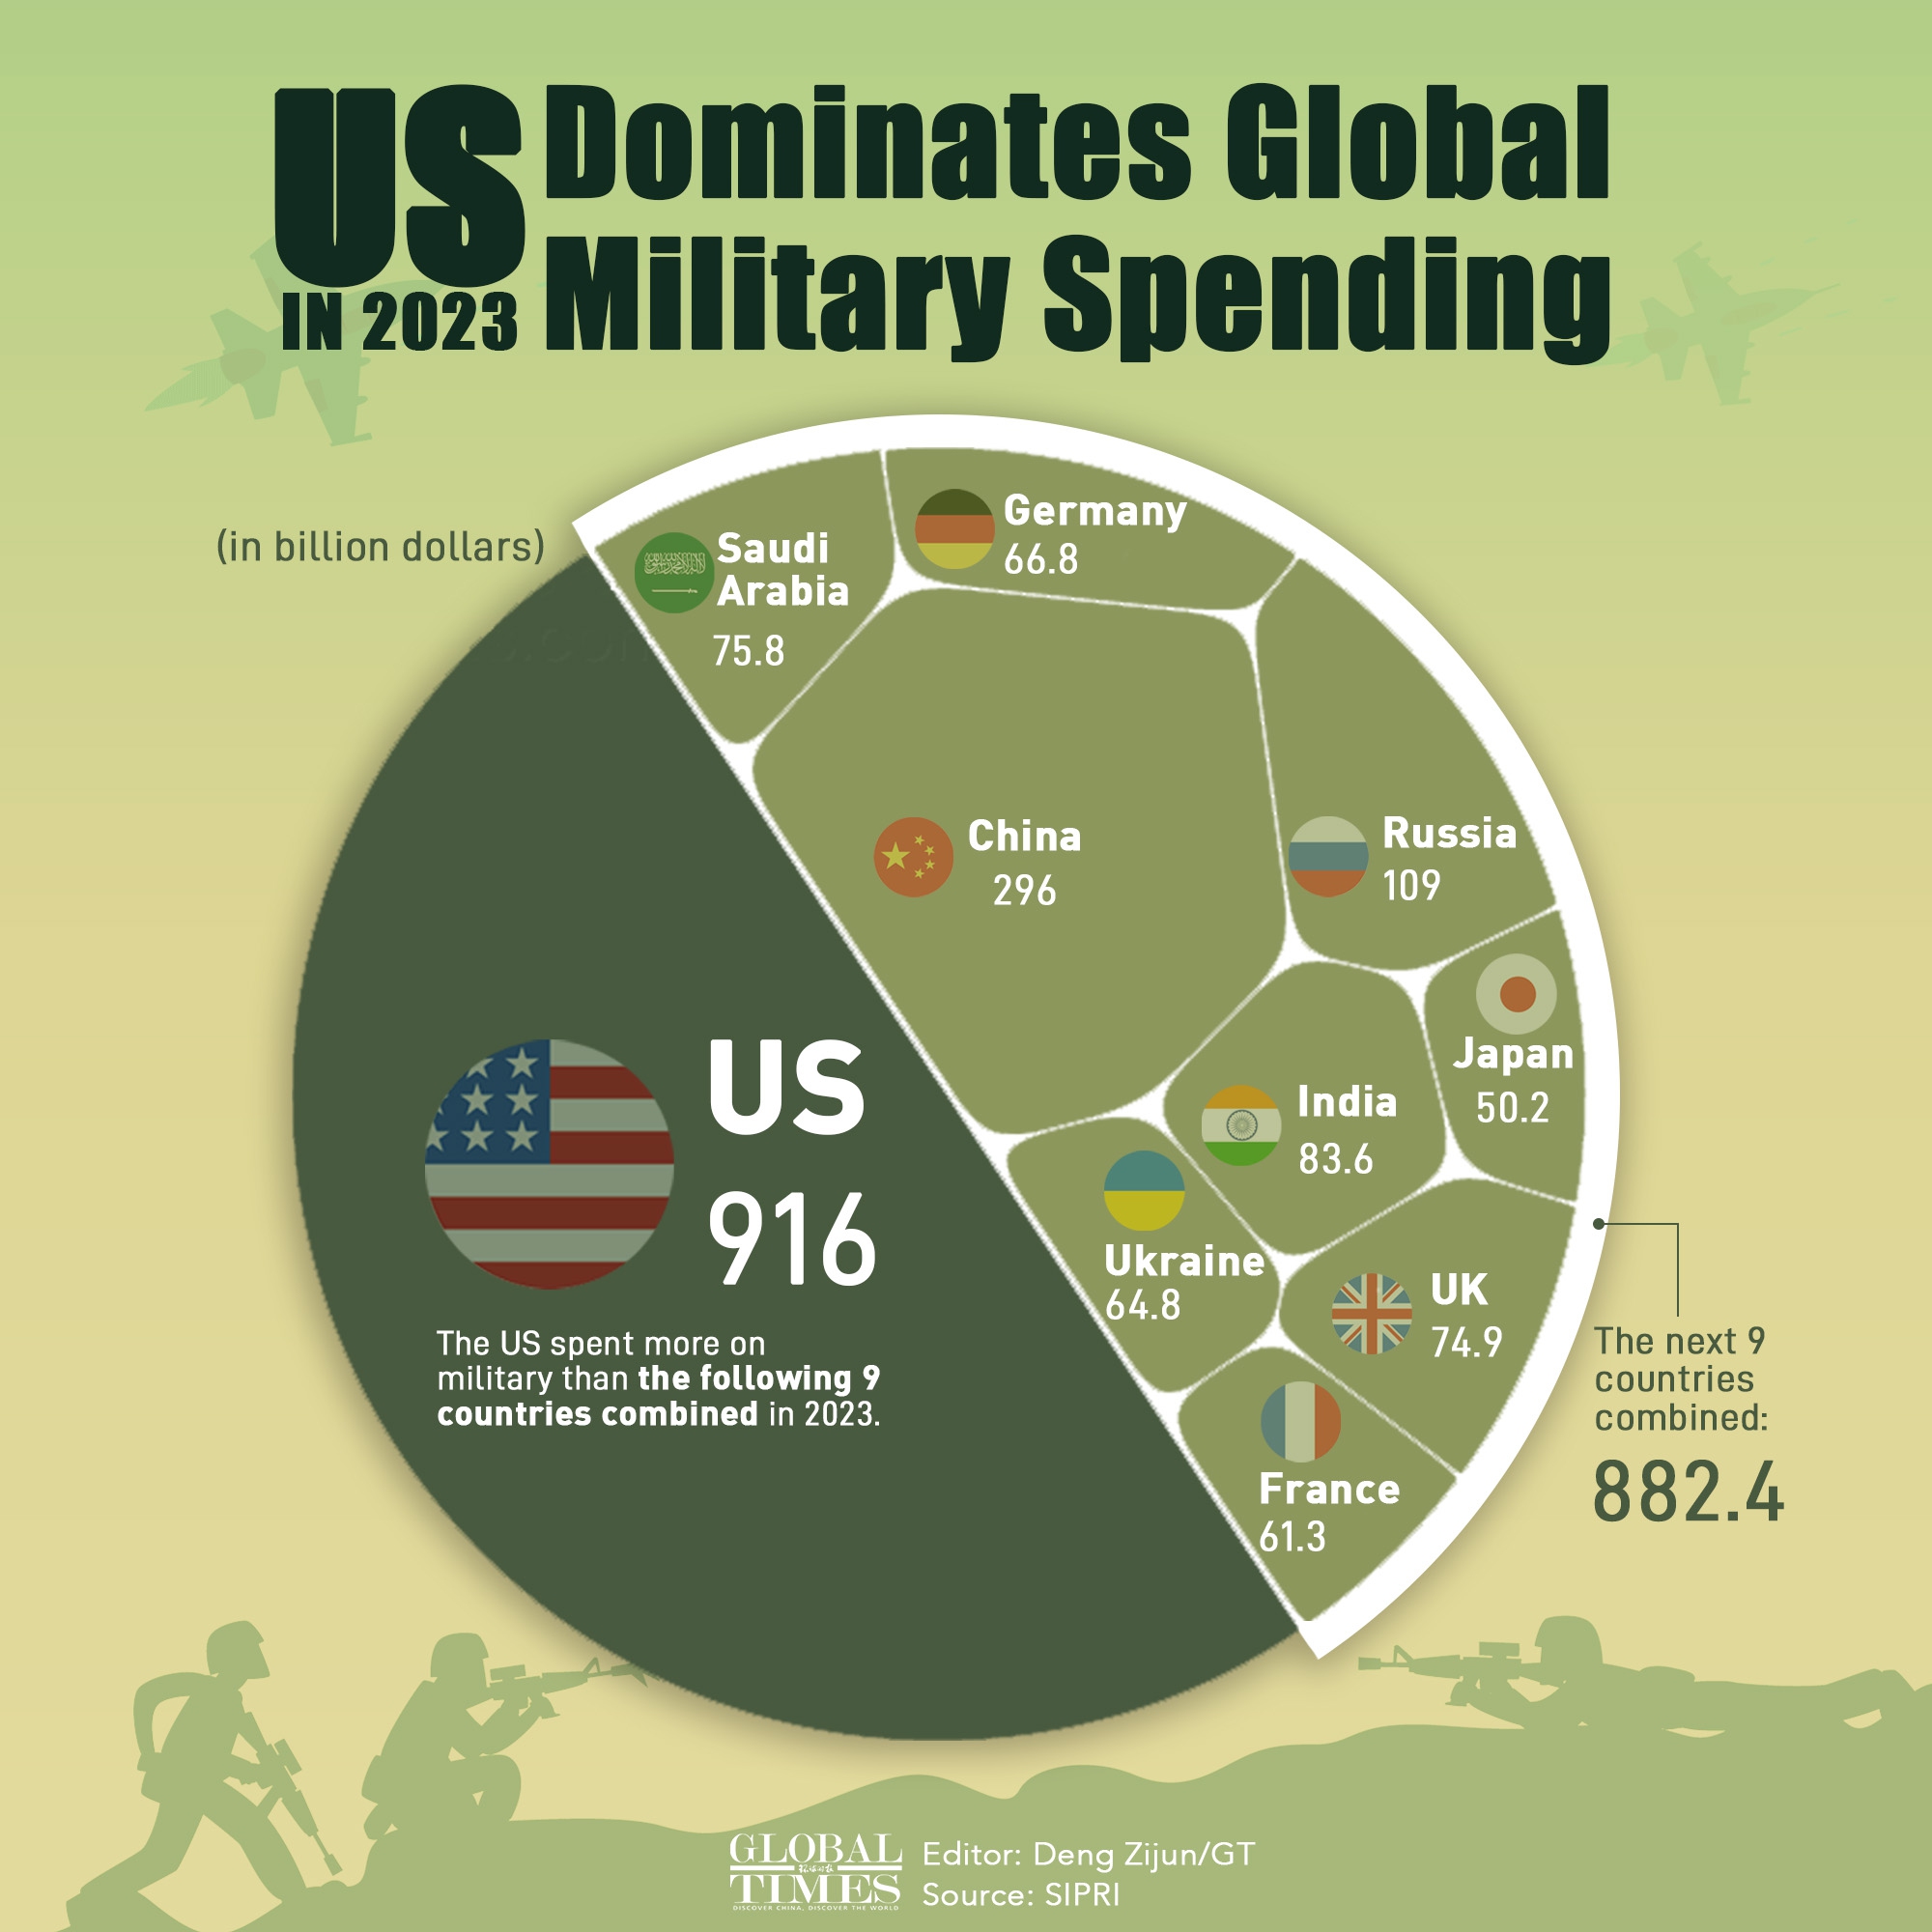 US dominates global military spending in 2023 Graphic: Deng Zijun/GT